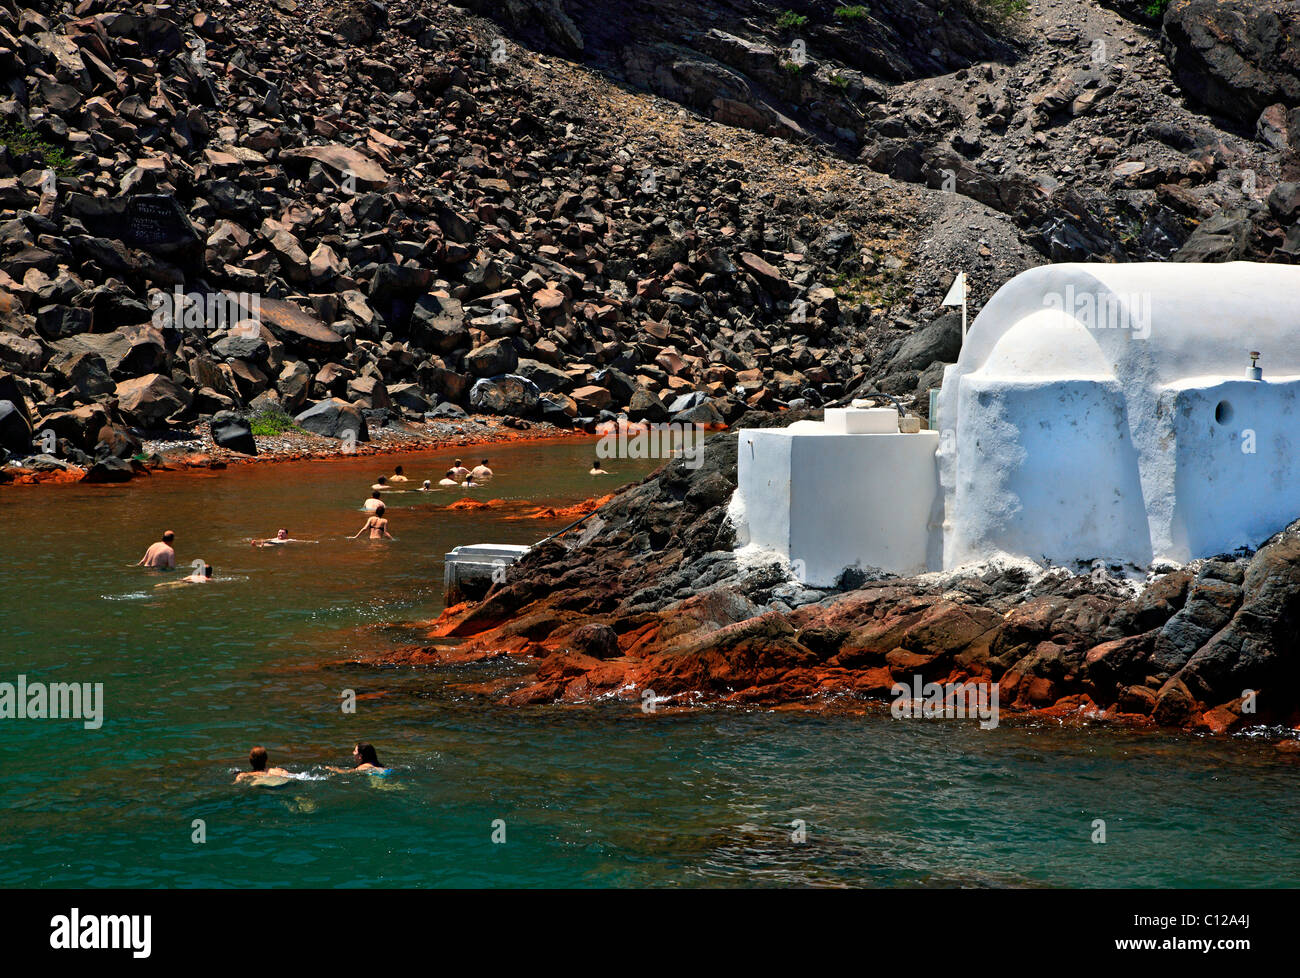 Santorini island hot springs fotografías e imágenes de resolución - Alamy